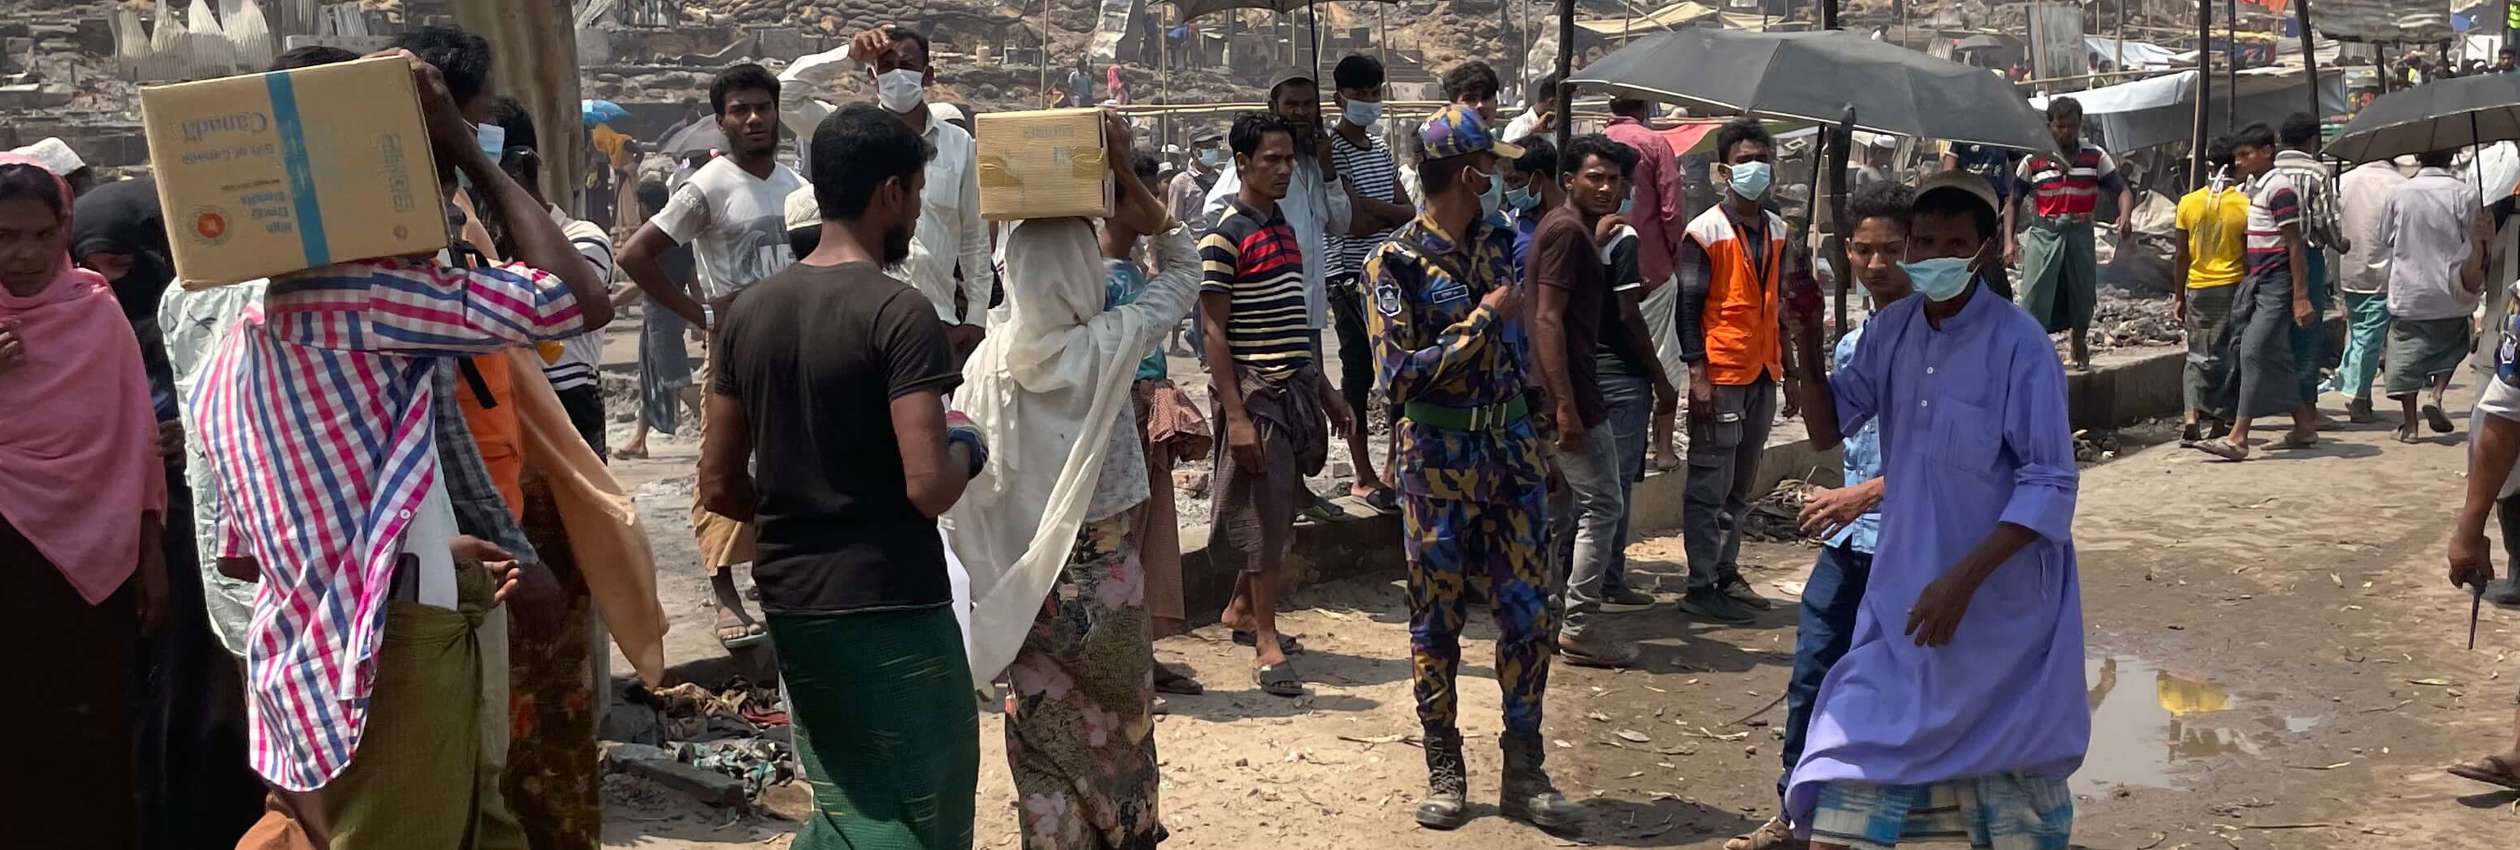 Rohingya refugees line up to evacuate burnt down refugee camp.